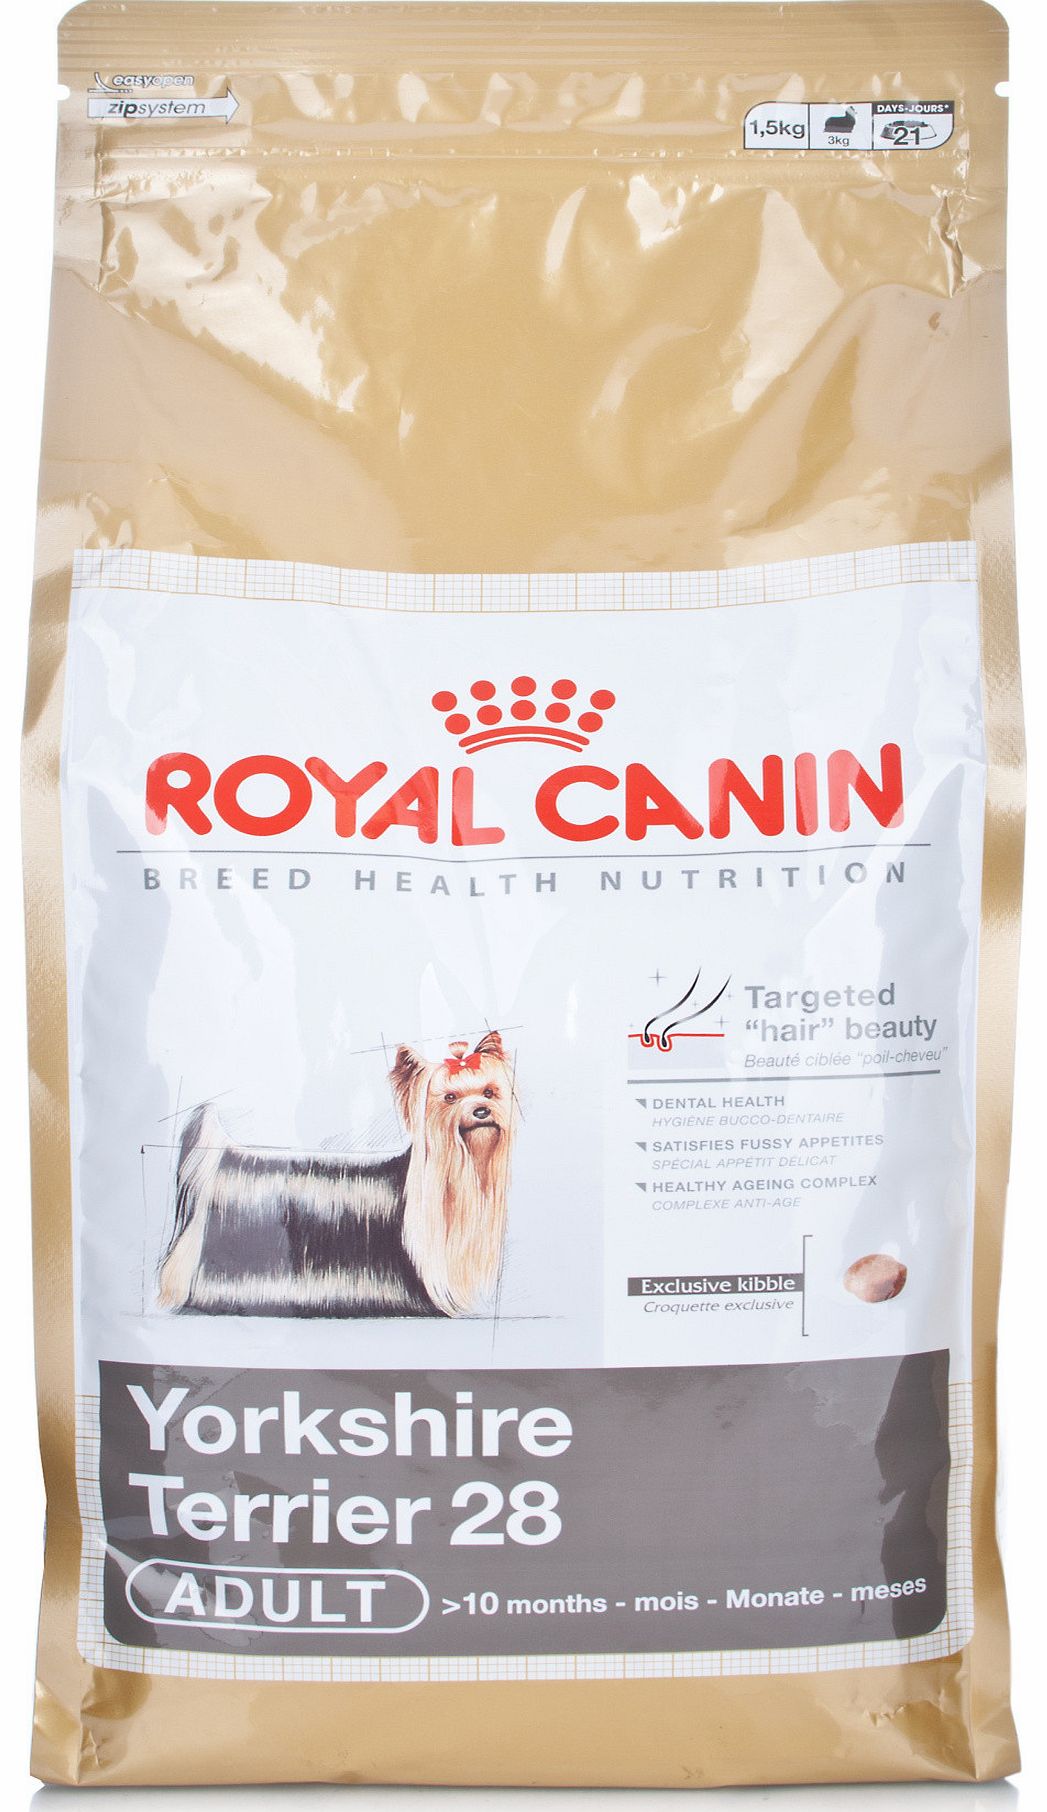 Royal Canin Breed Health Nutrition Yorkshire